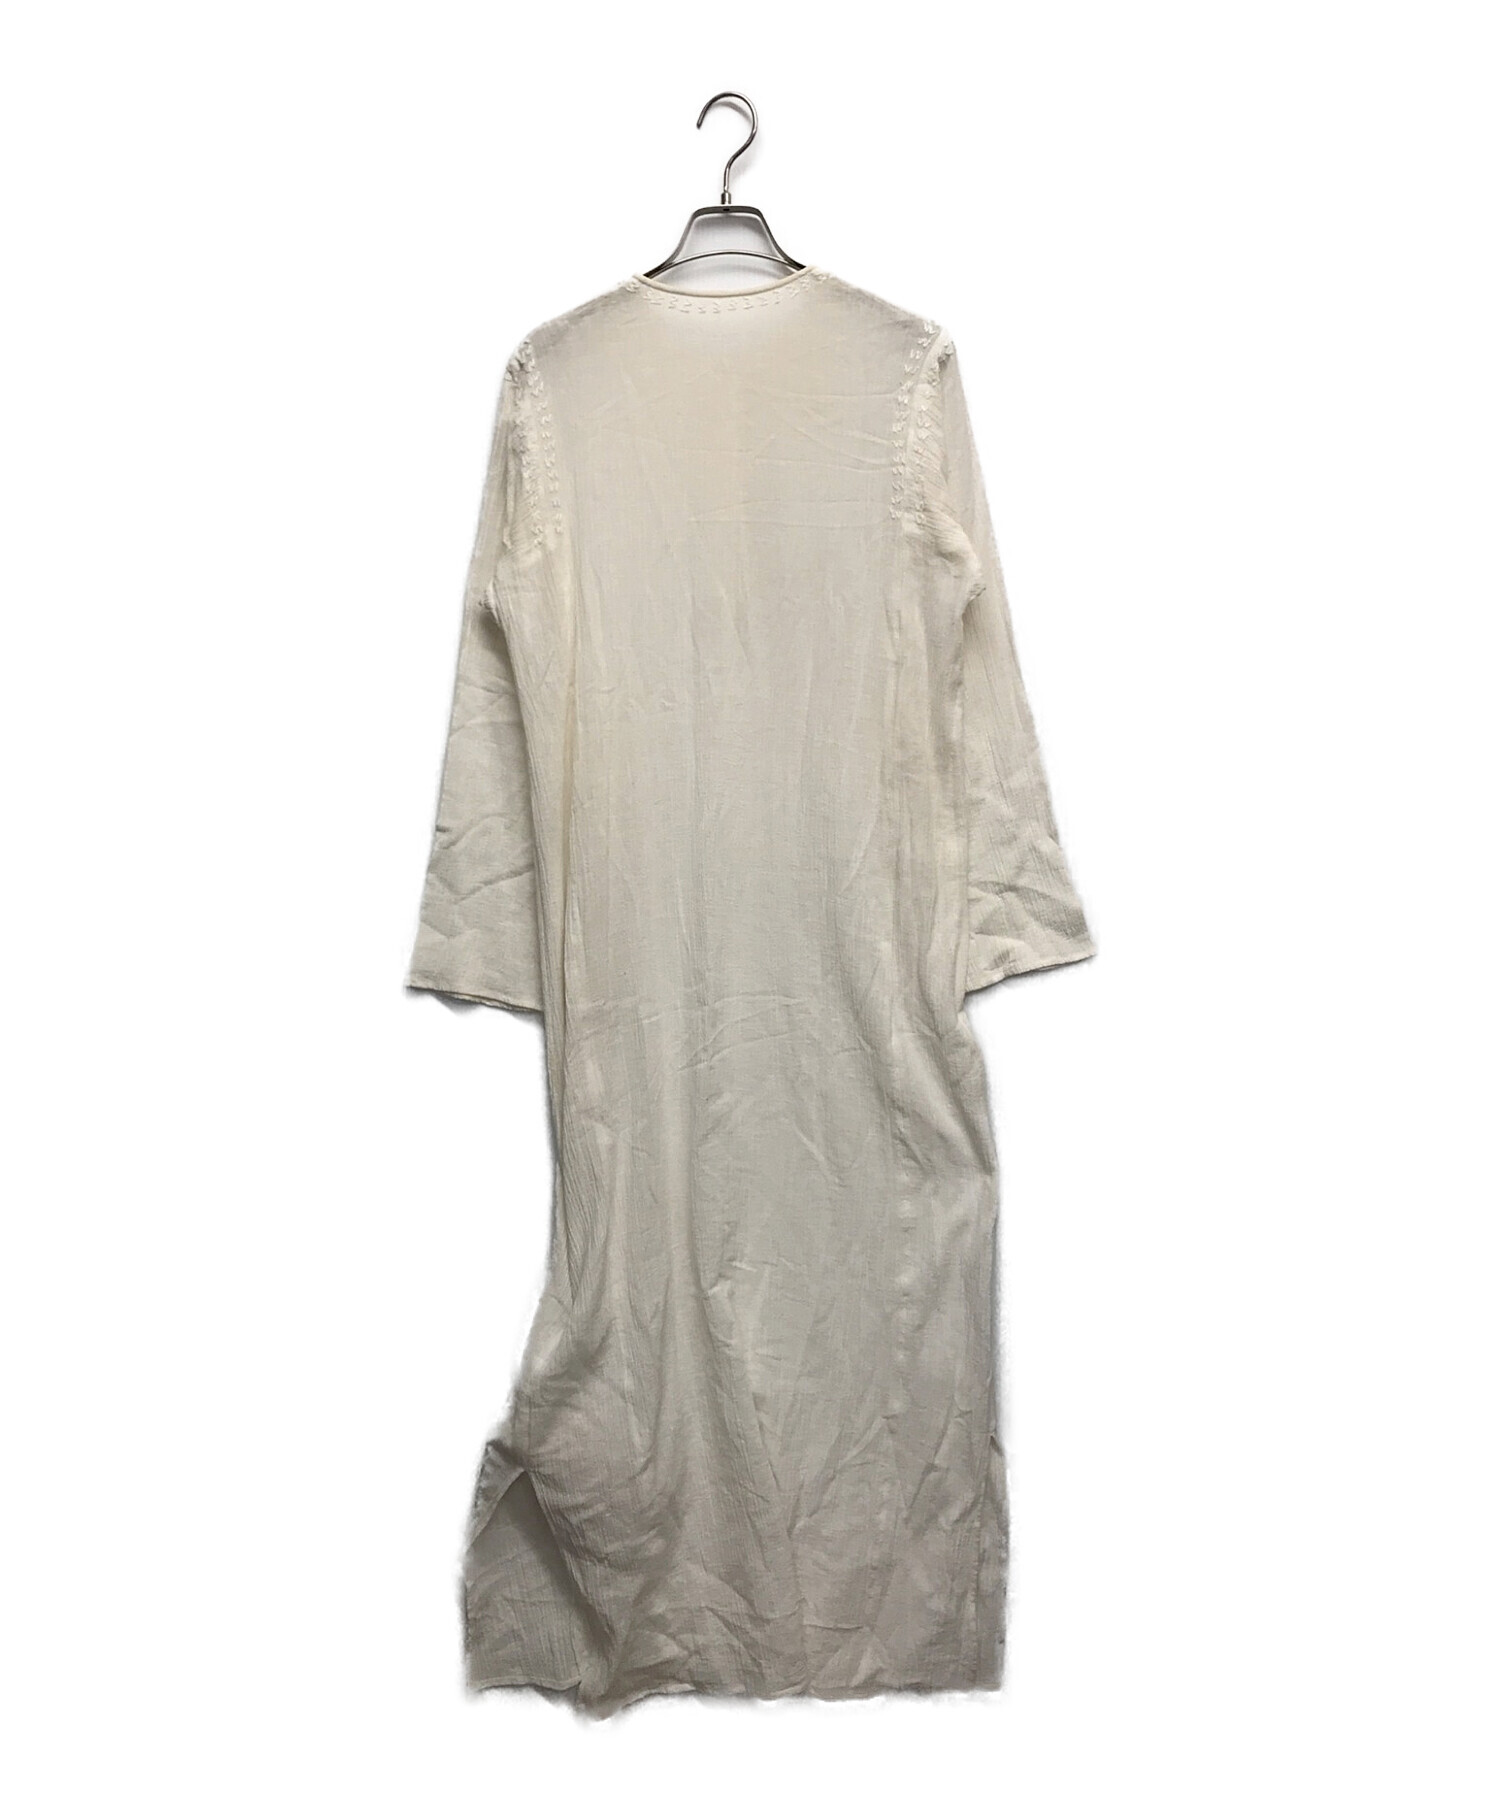 TODAYFUL (トゥデイフル) Embroidery Gauze Dress ホワイト サイズ:38